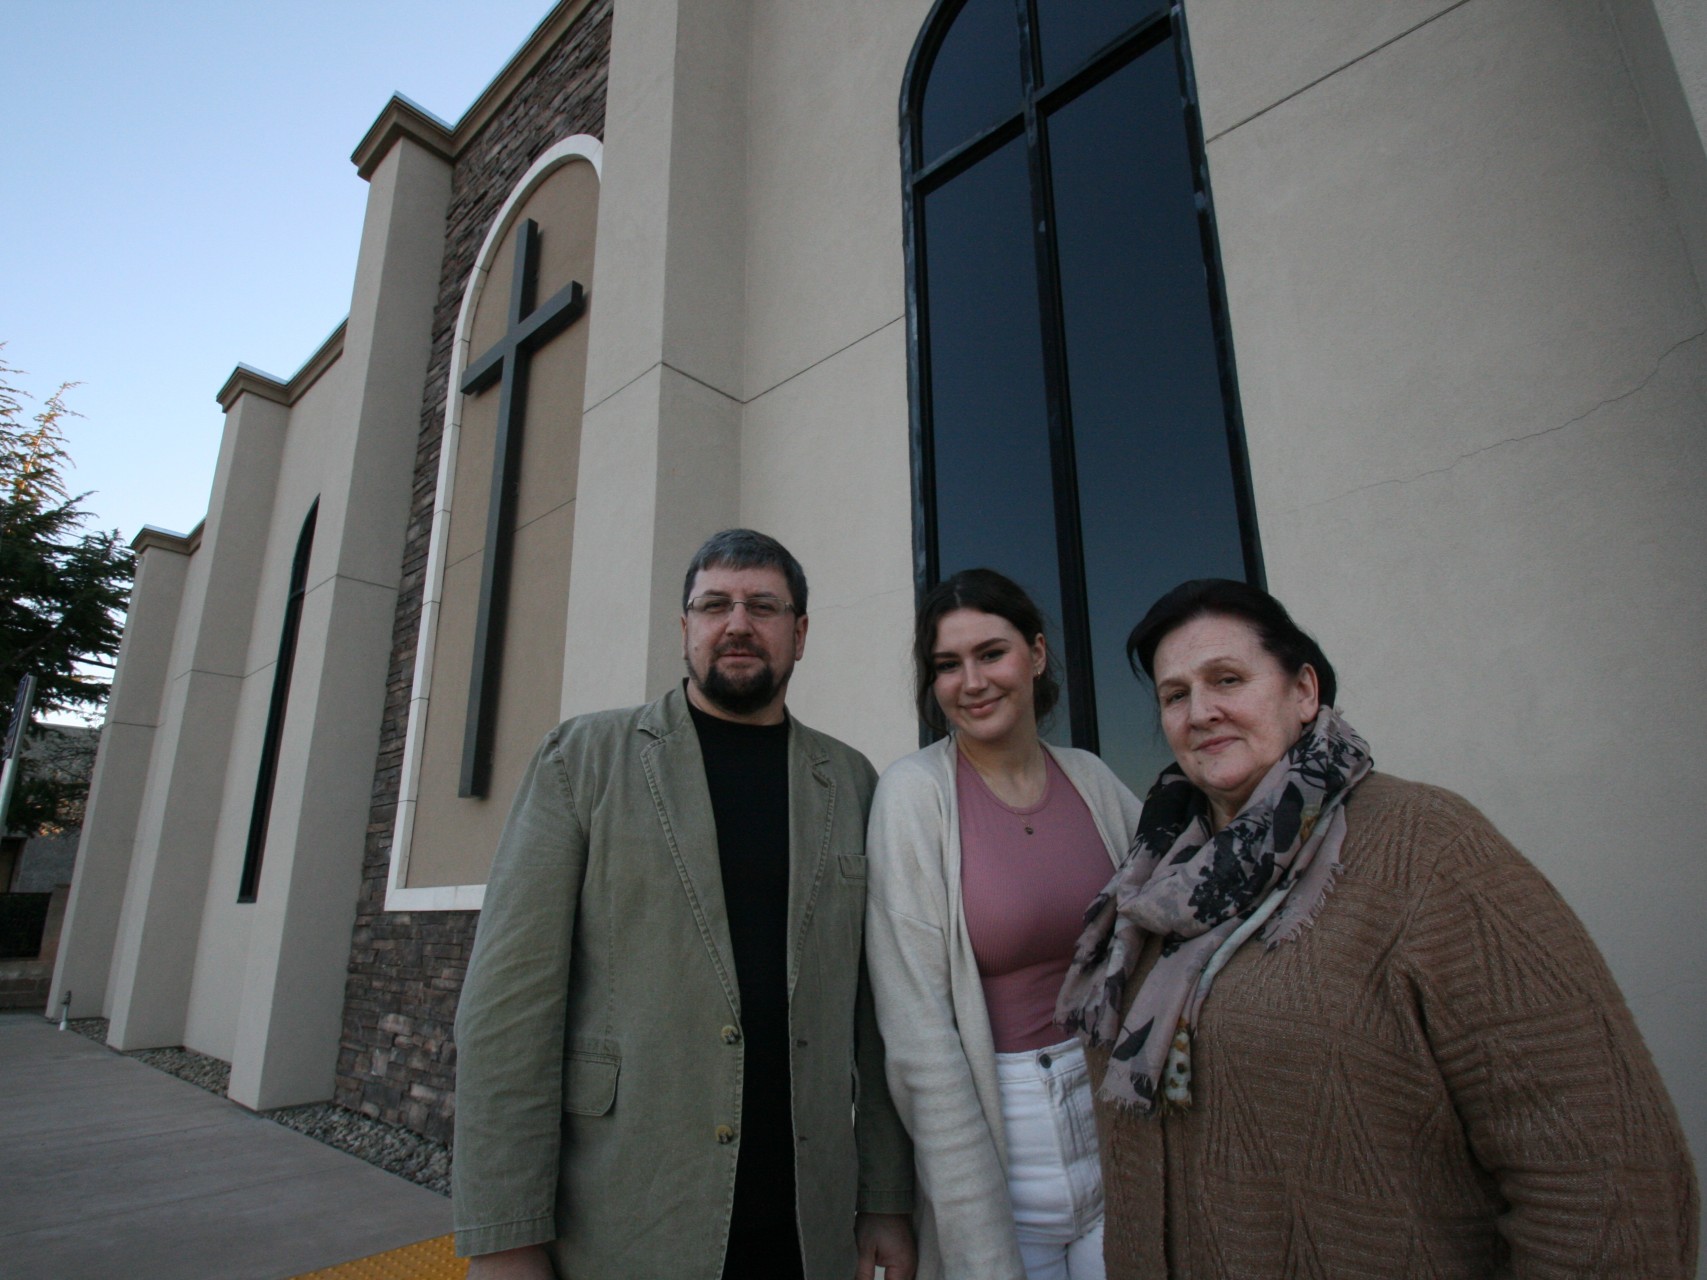 How Ukrainian Churches in Sacramento are leading the war response